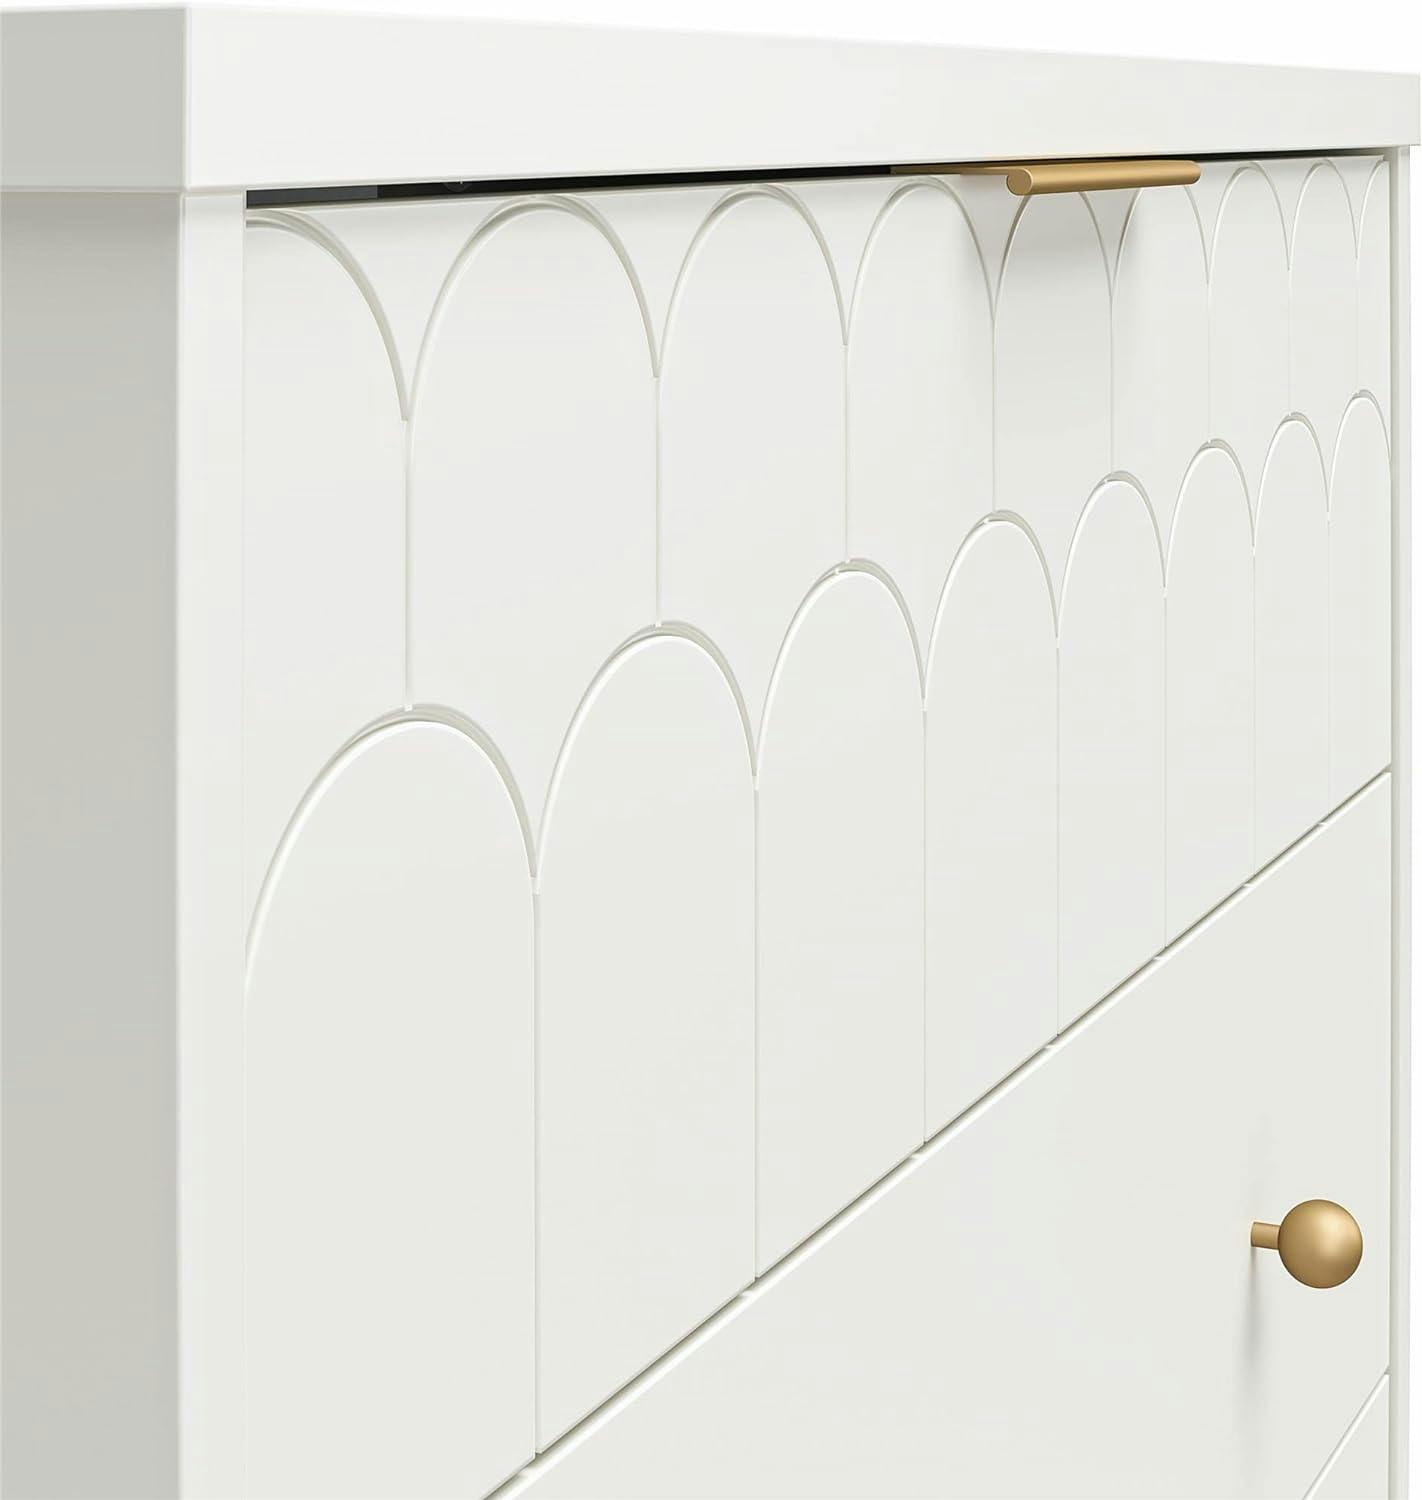 Anastasia Creamy White 5-Drawer Dresser with Brassy Gold Accents